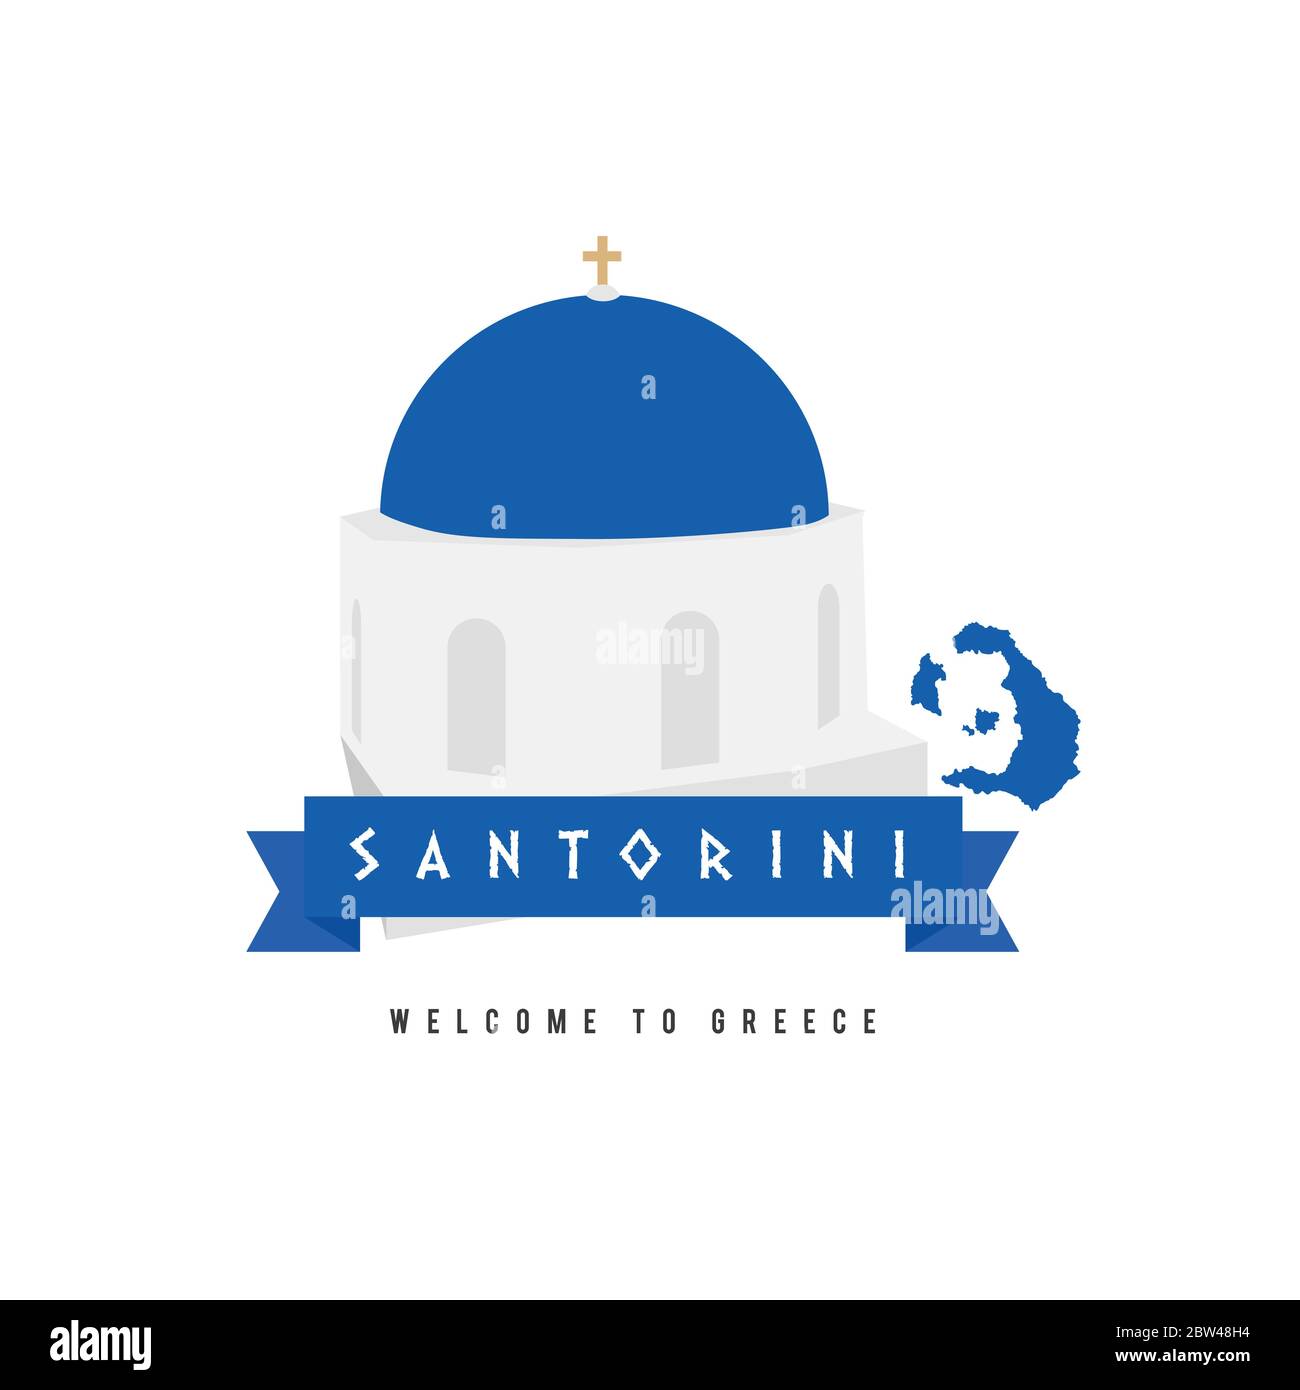 santorini island greece symbol in blue and white illustration Stock Vector